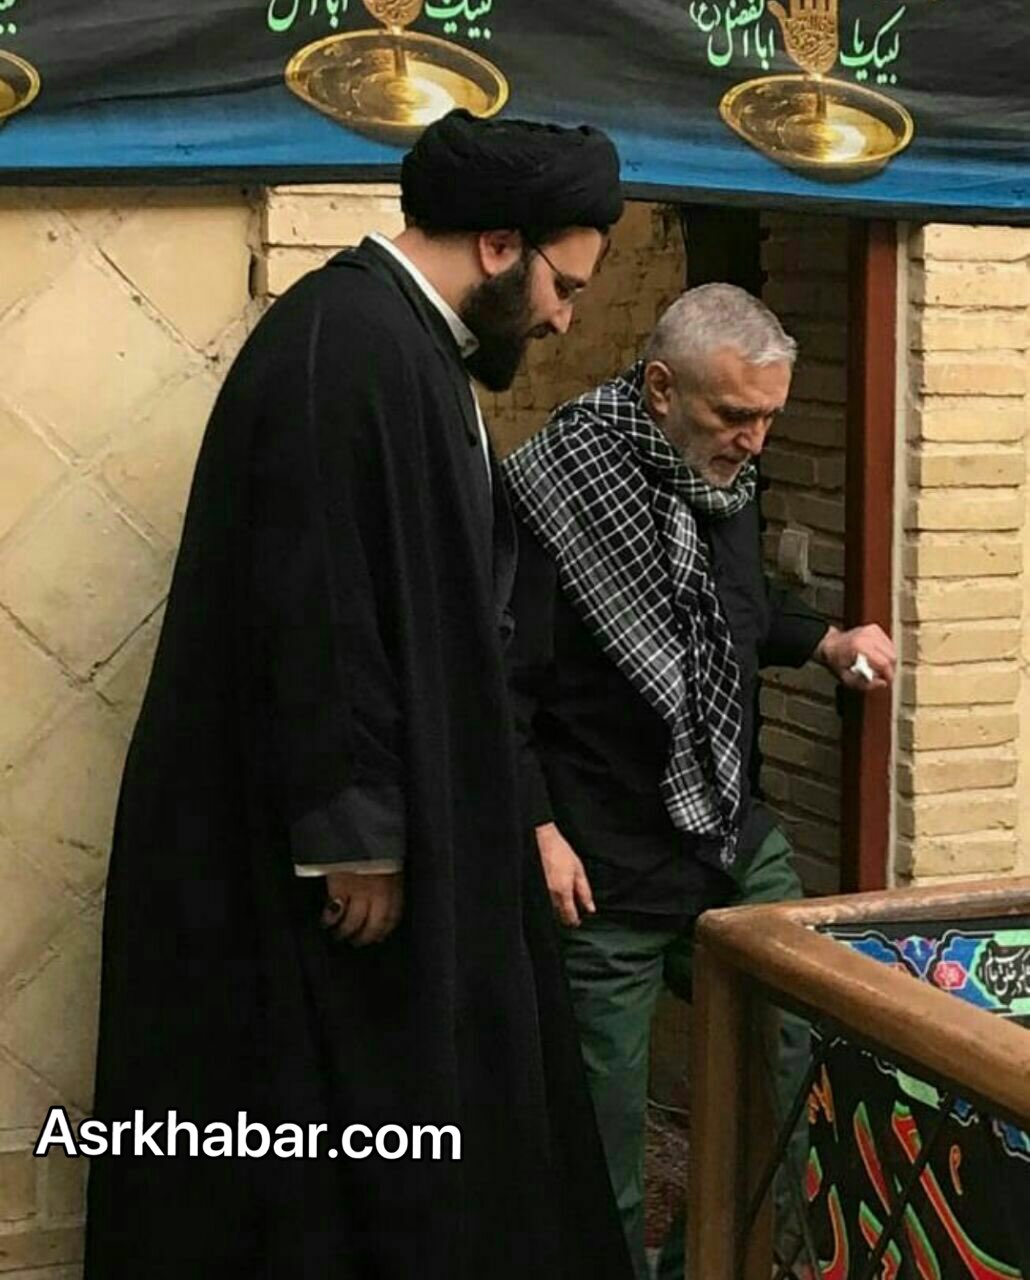 حضور منصور ارضي در منزل سيد علي خميني در نجف اشرف(عكس)